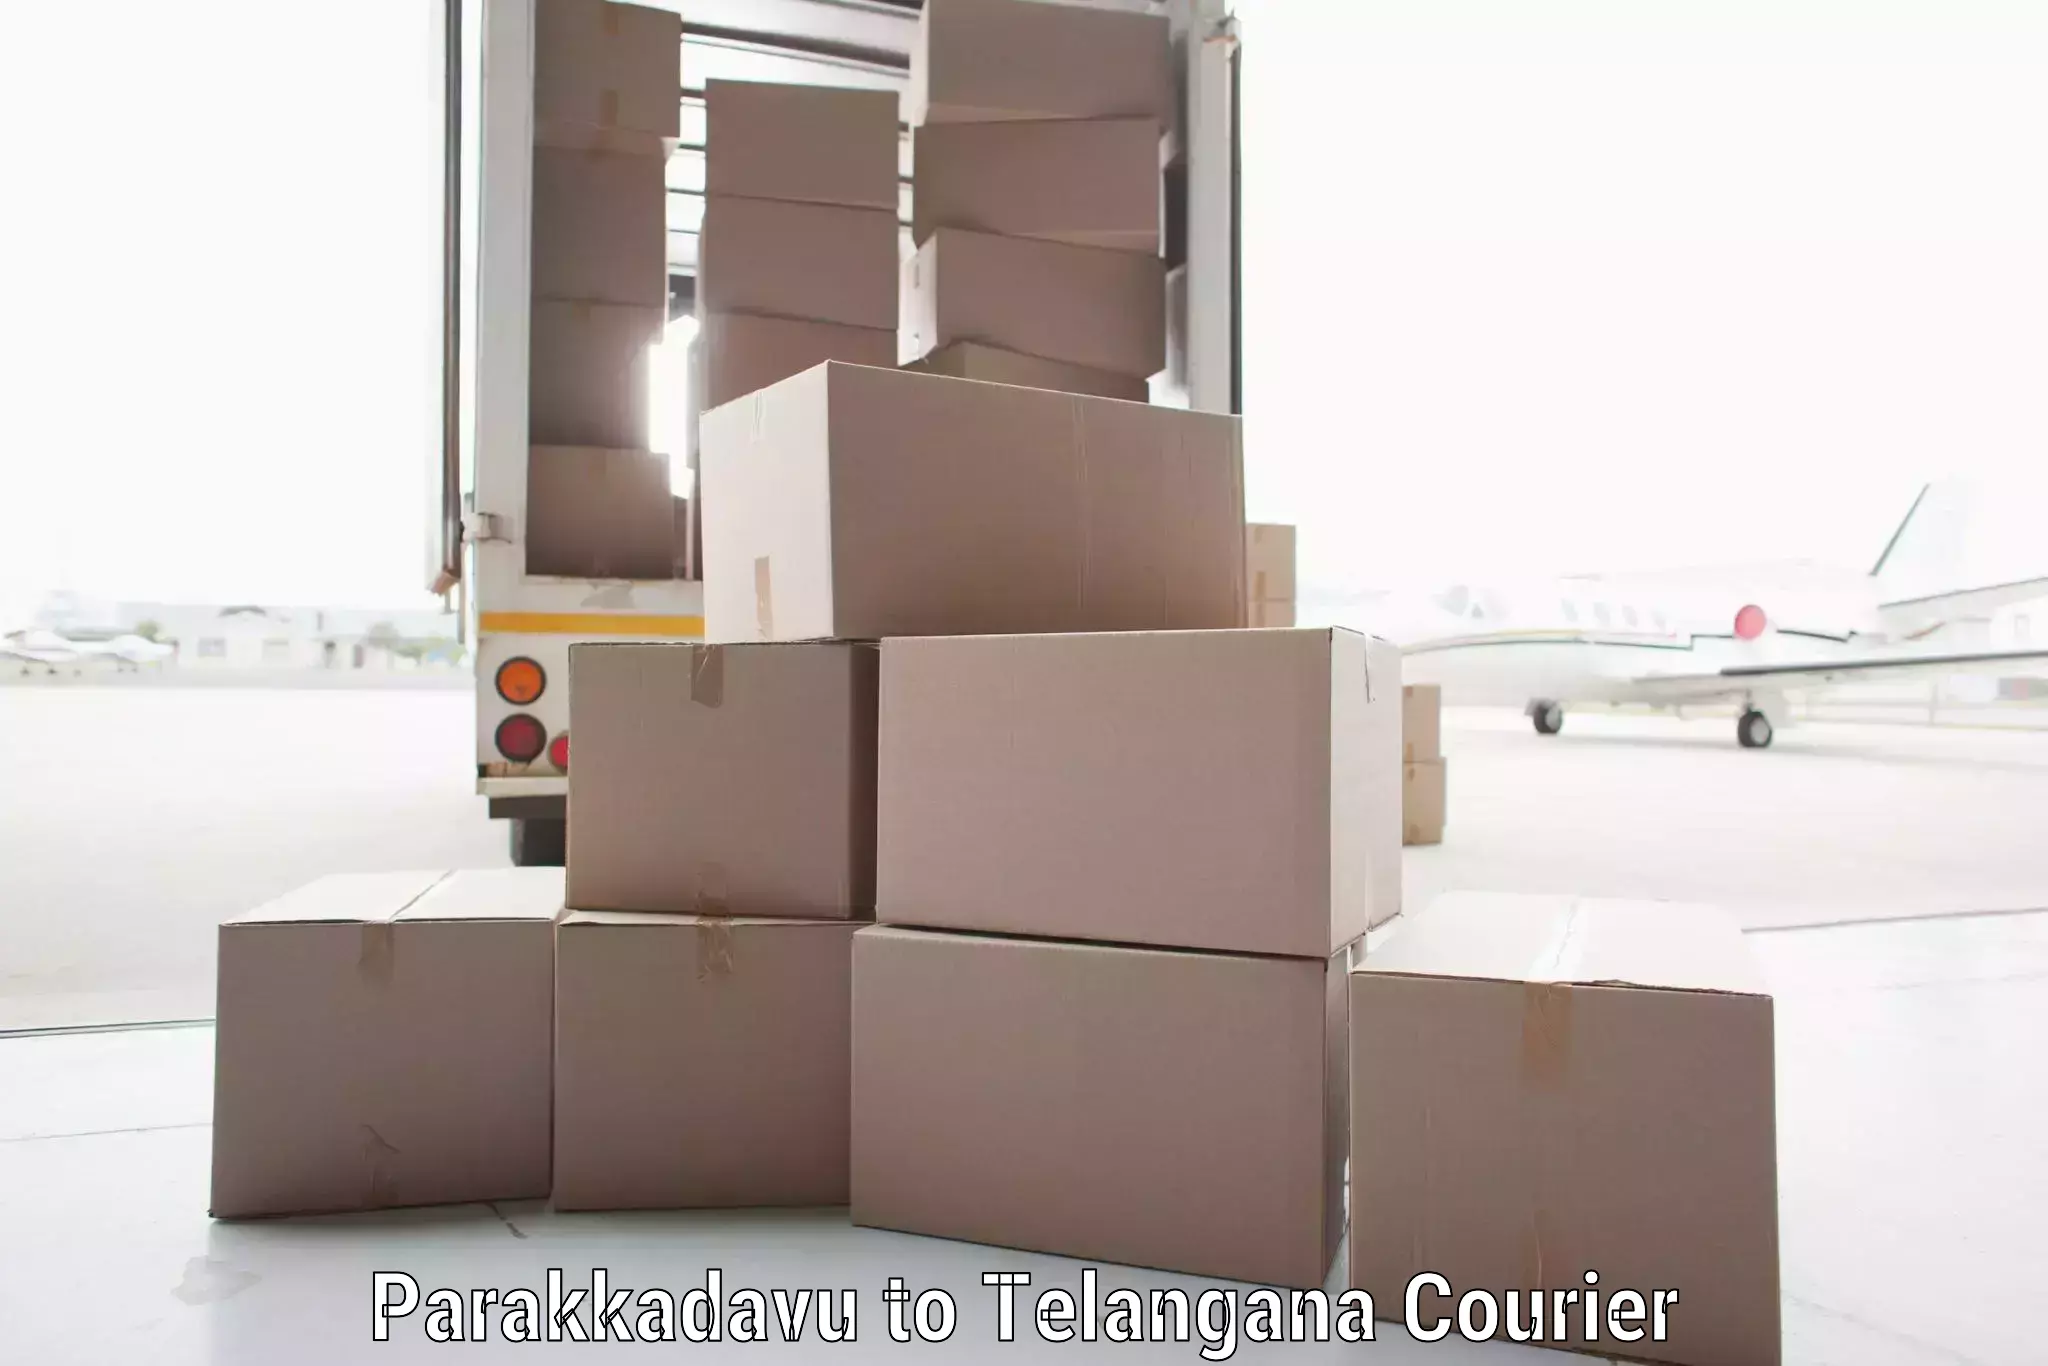 Efficient logistics management Parakkadavu to Yellareddy